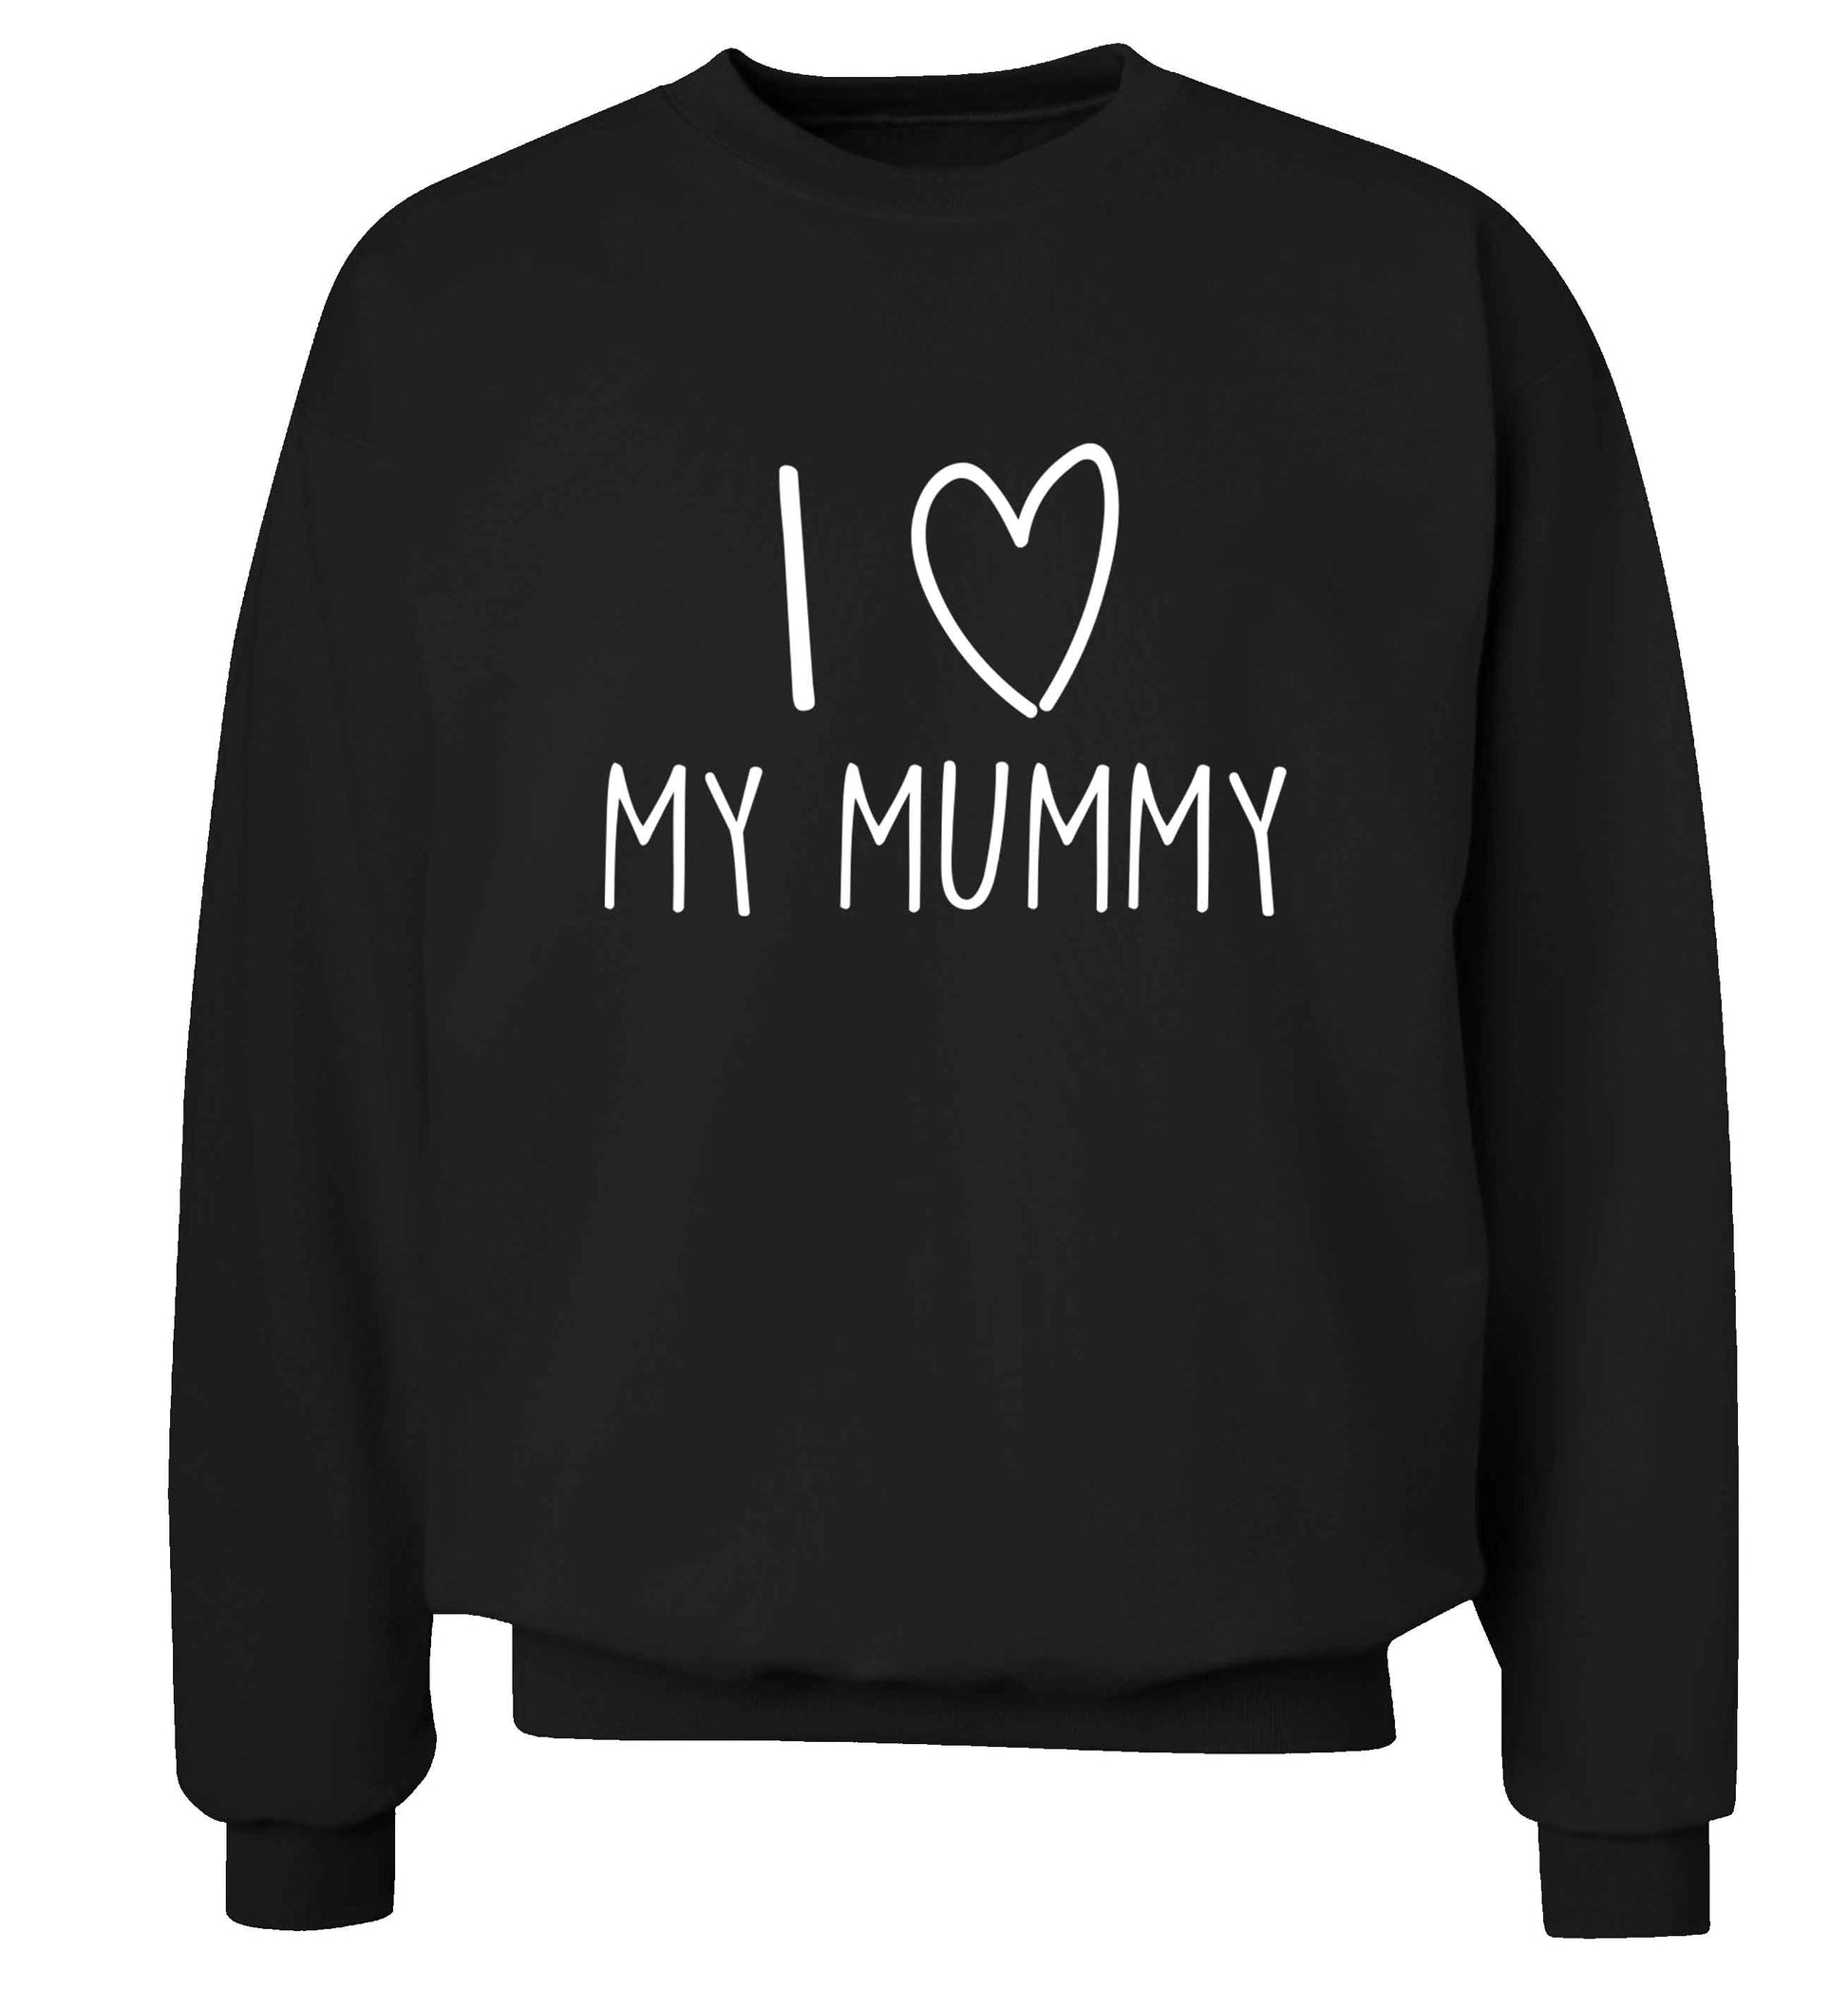 I love my mummy adult's unisex black sweater 2XL